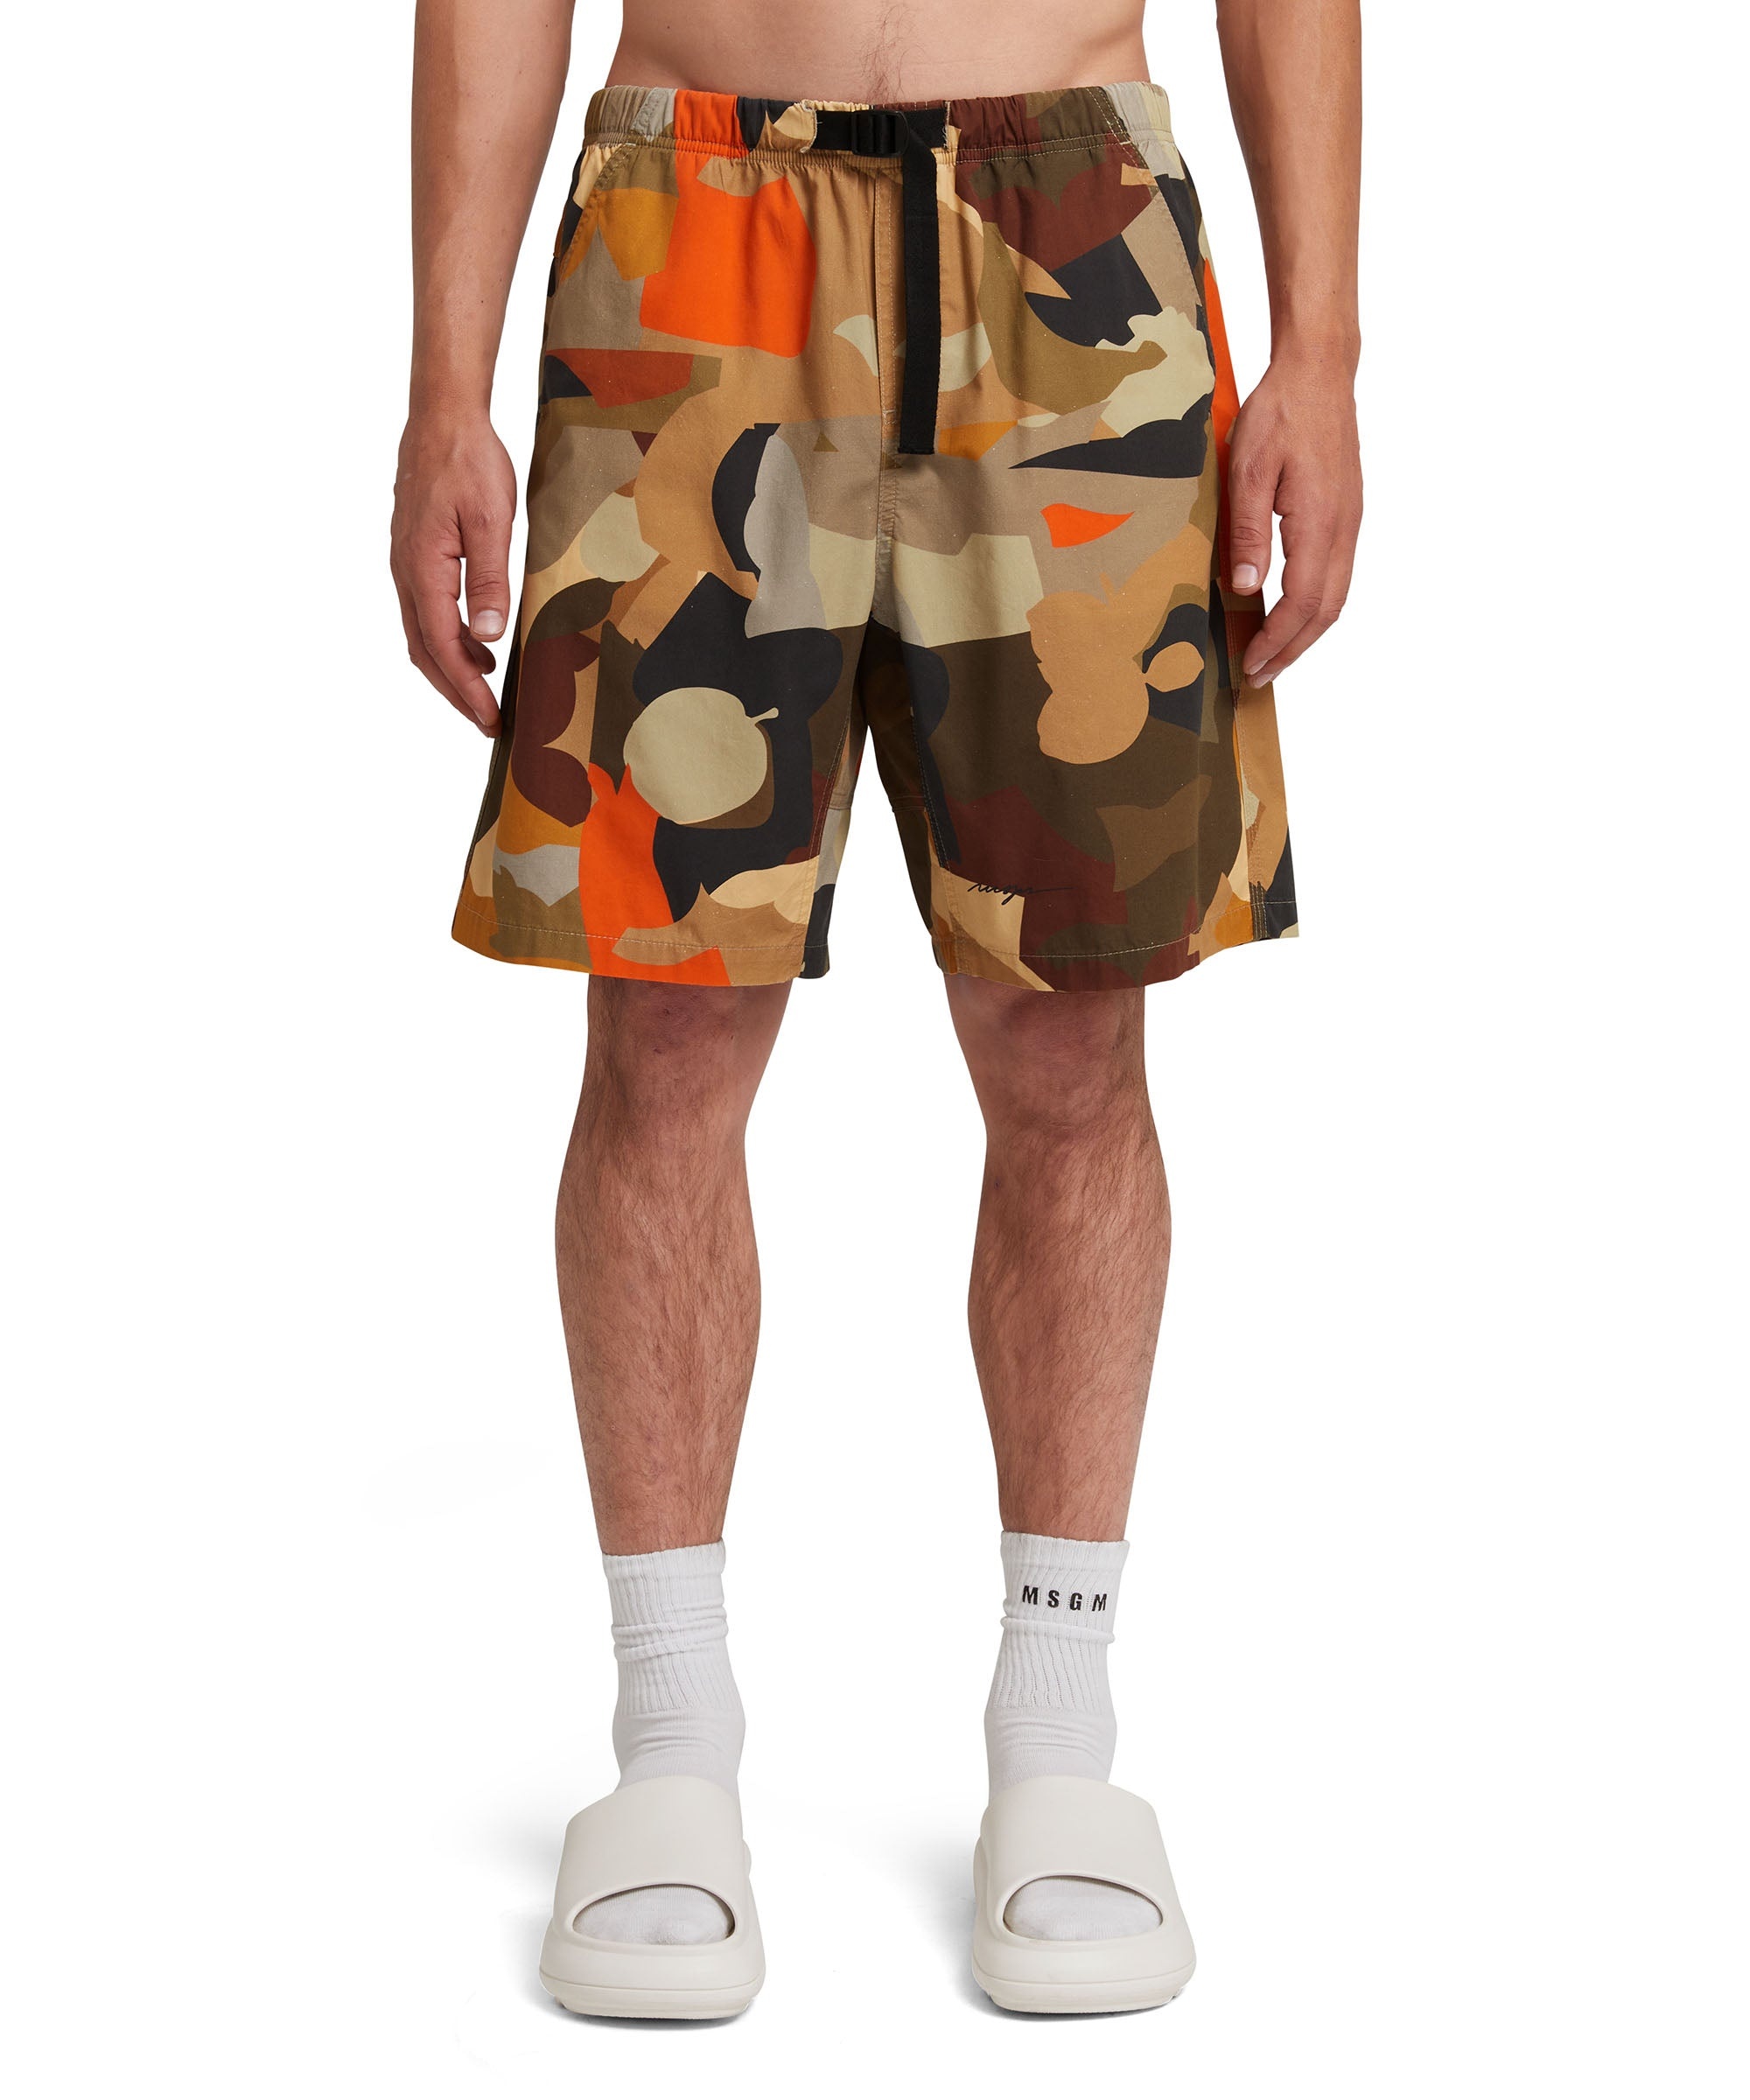 Poplin cotton shorts with "Geo Camo" print - 2